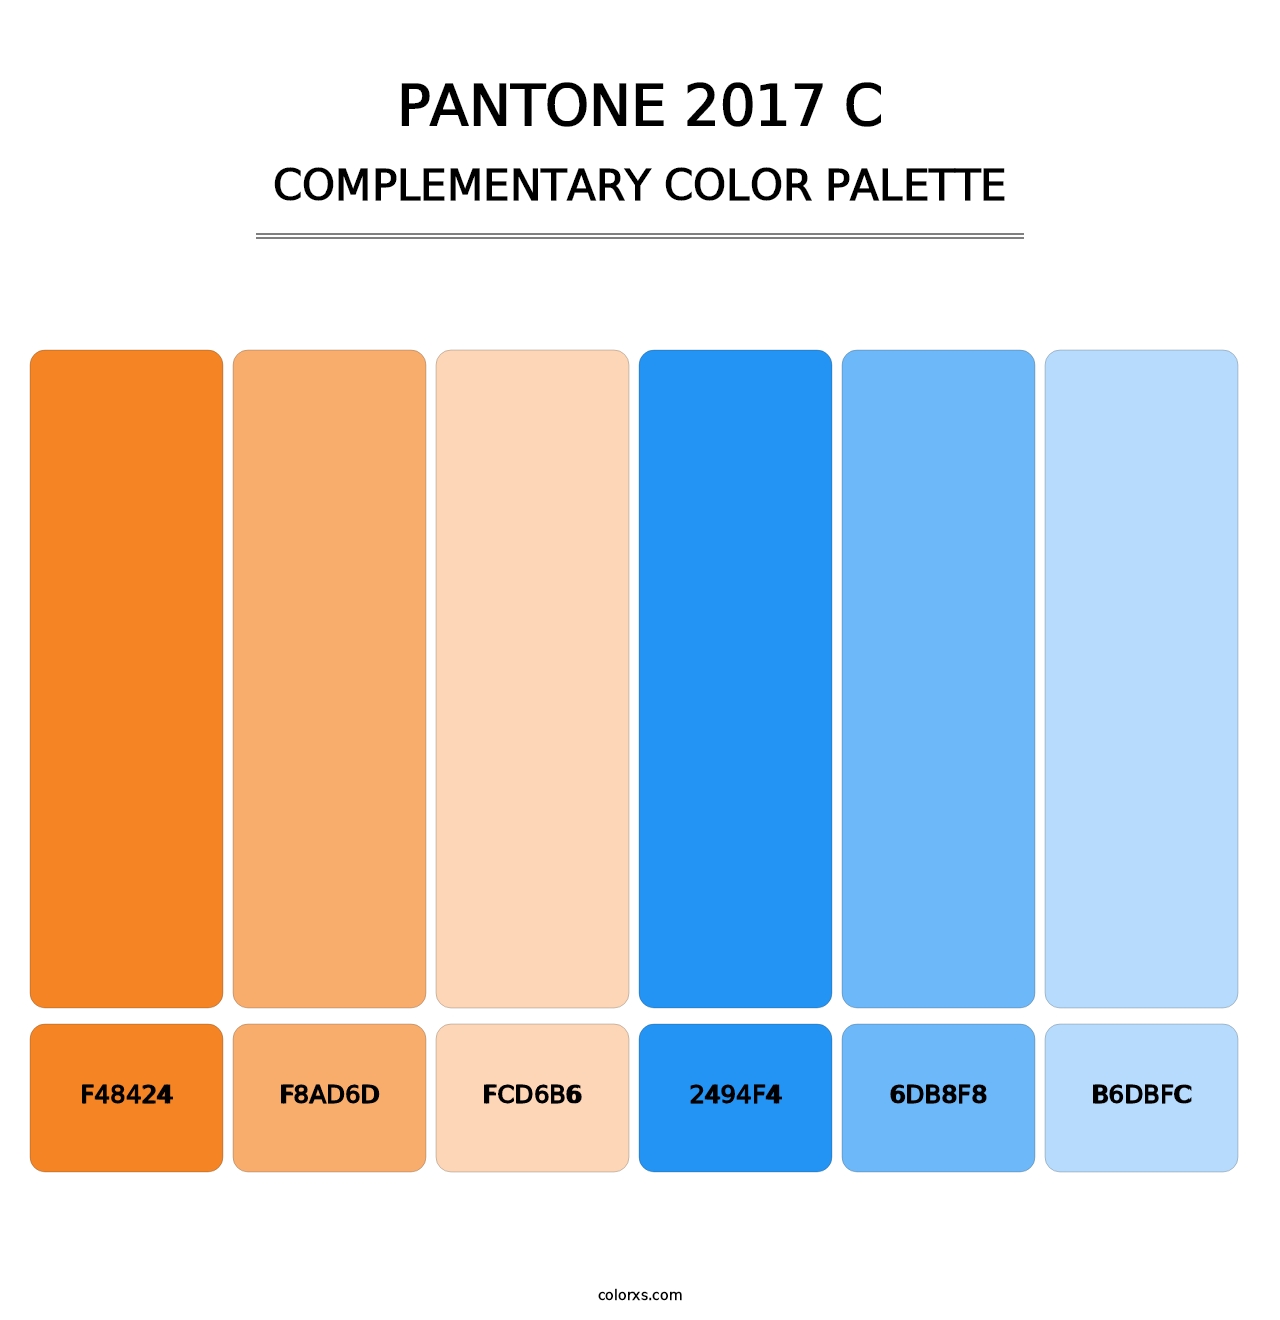 PANTONE 2017 C - Complementary Color Palette